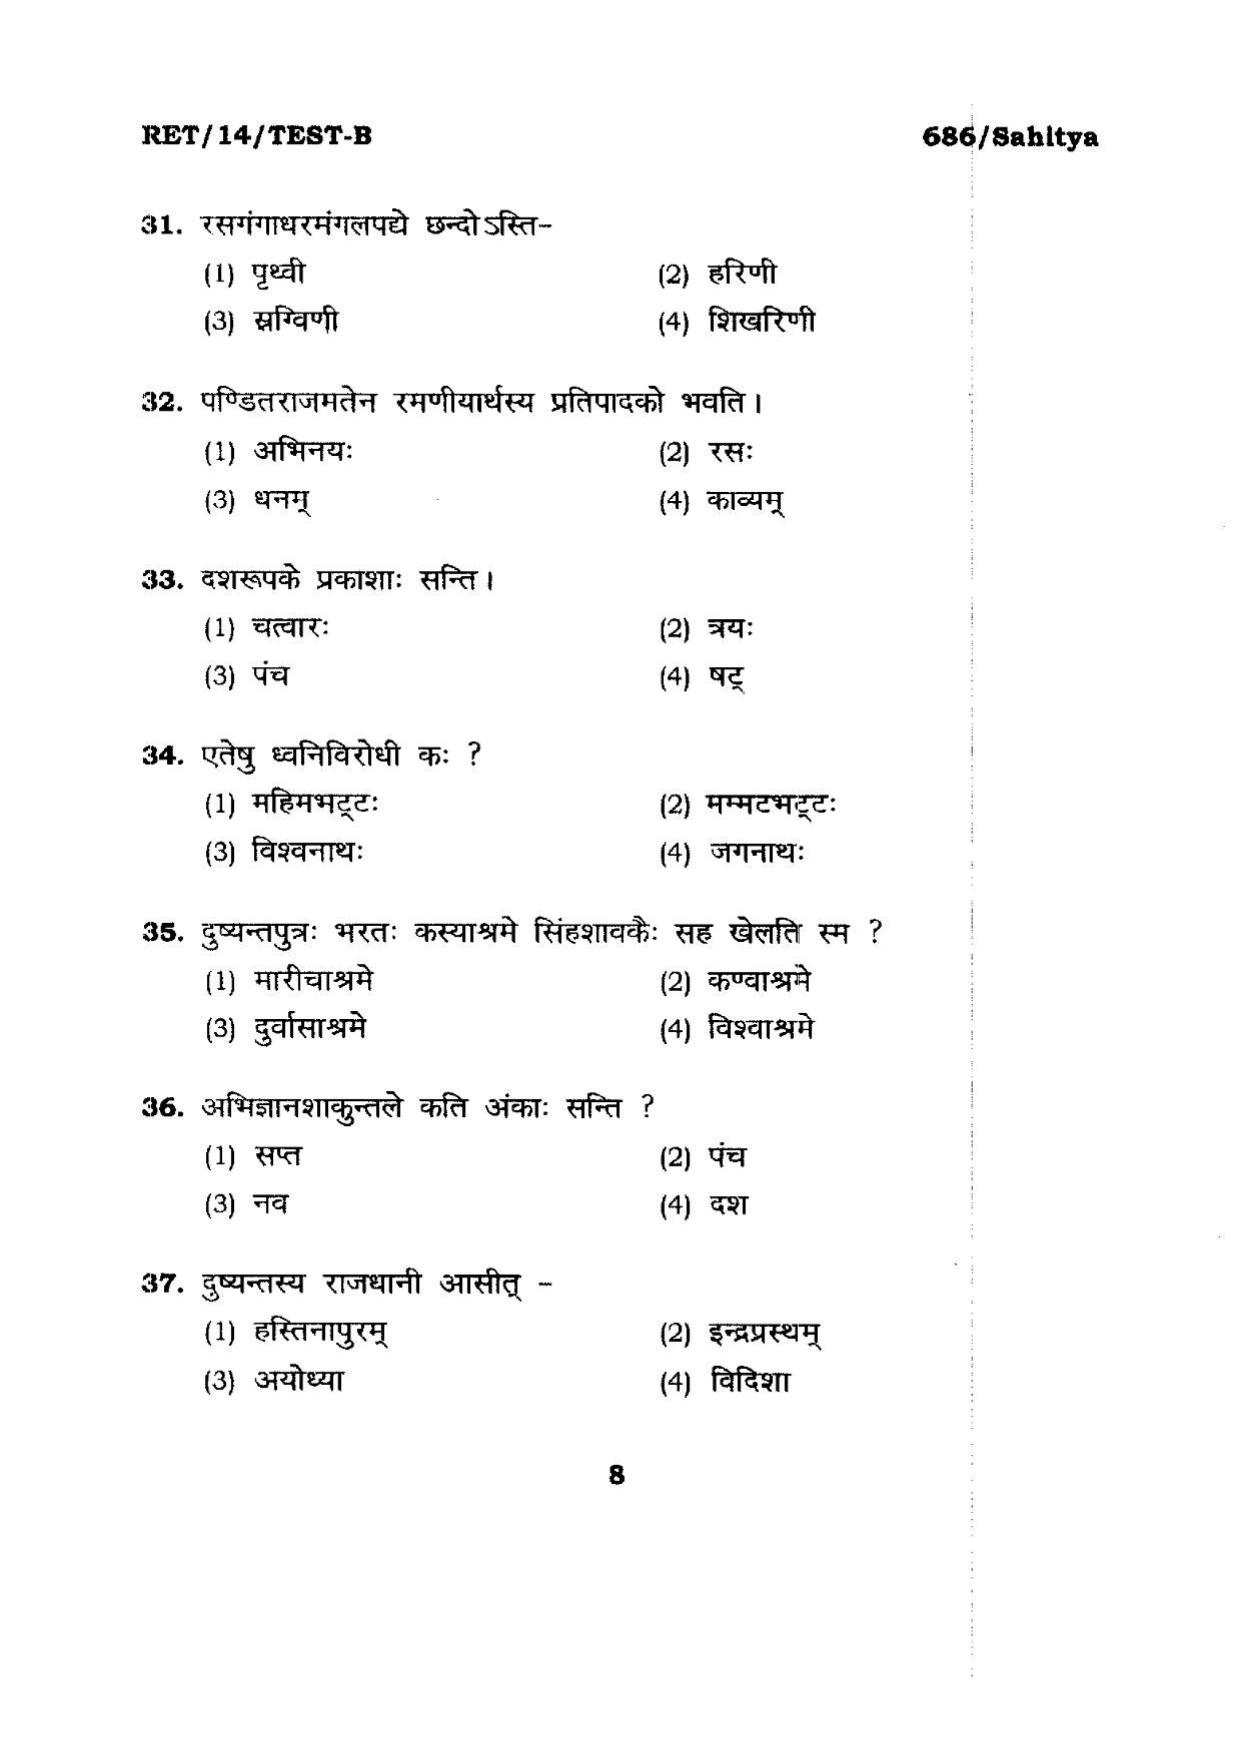 BHU RET Sahitya 2014 Question Paper - Page 8